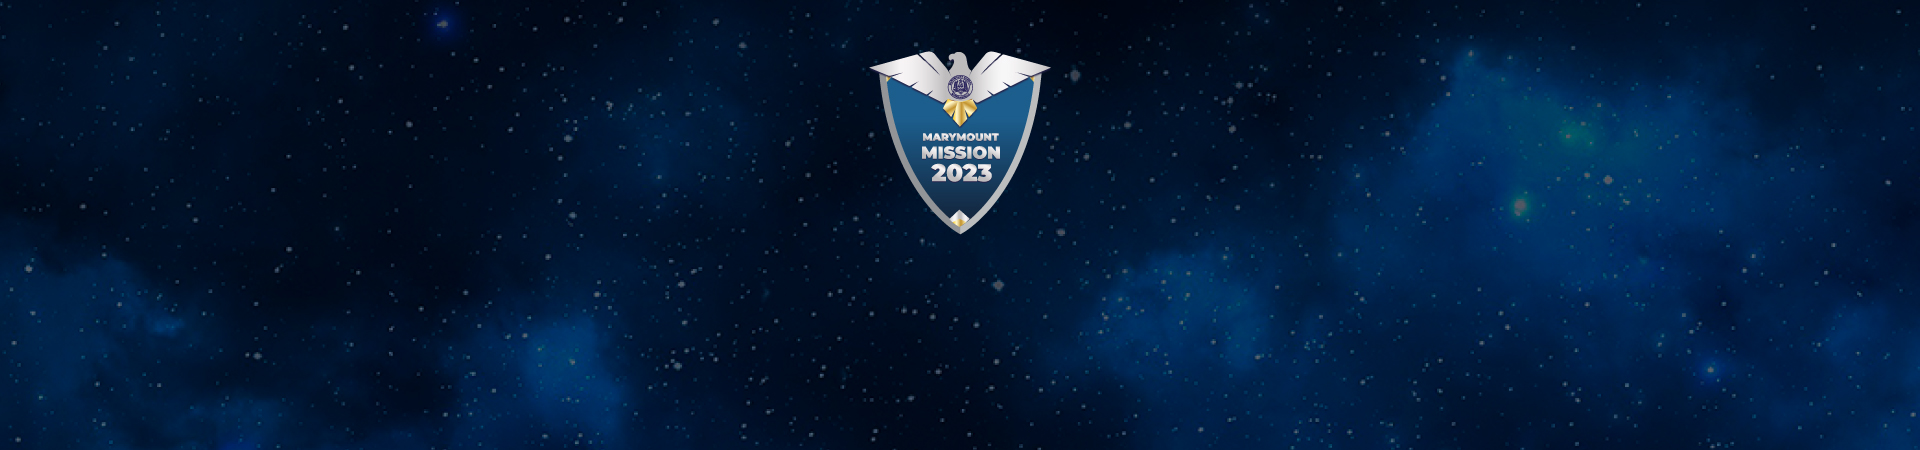 Marymount Mission 2023